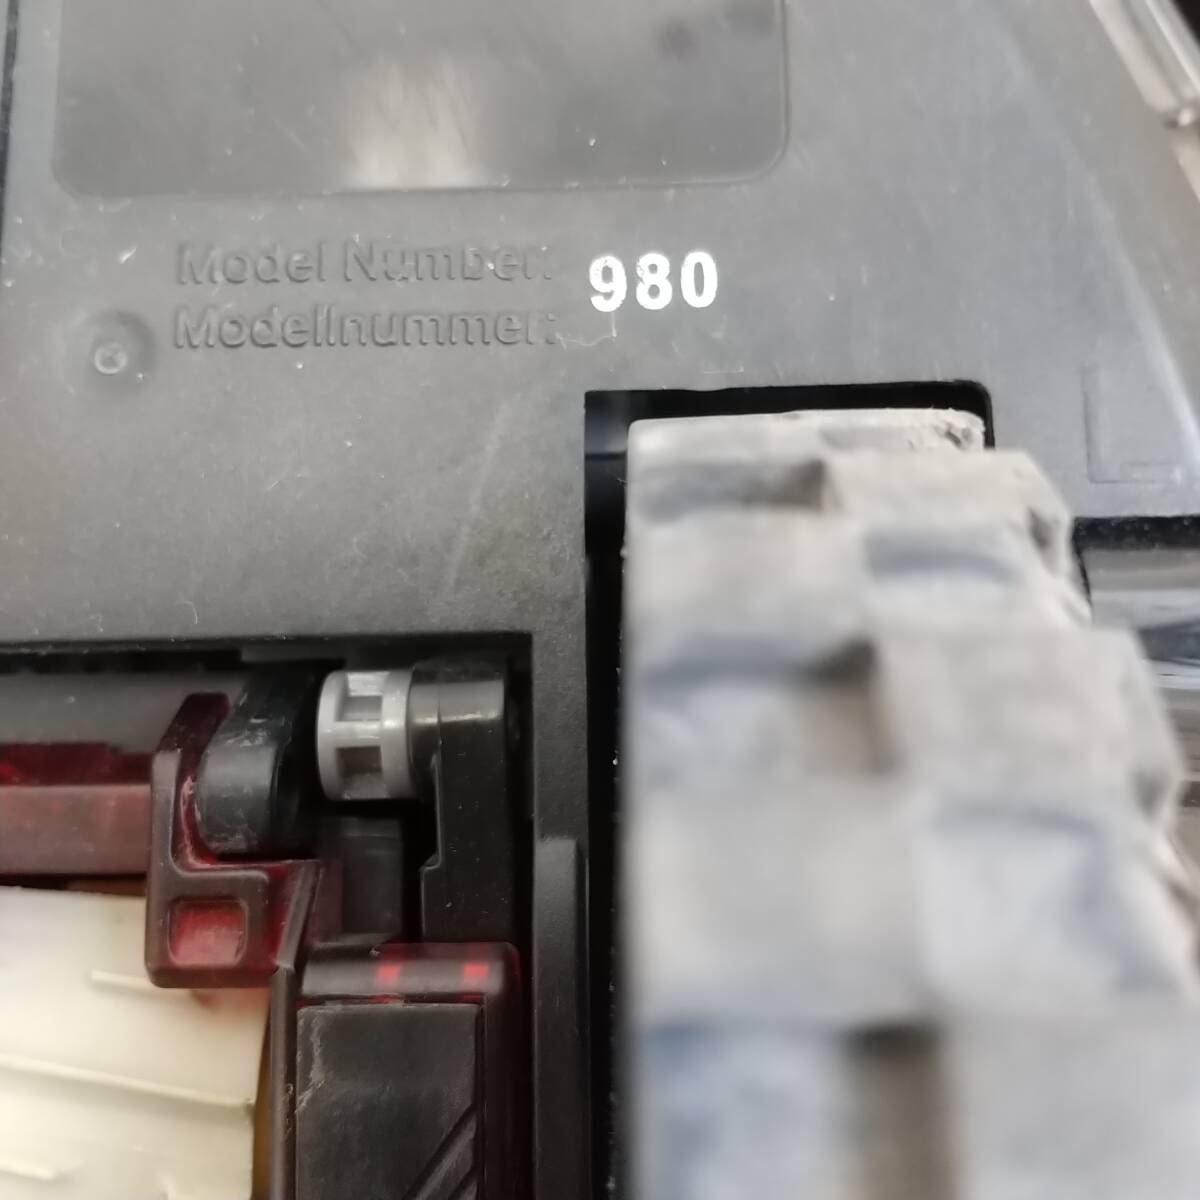 [578] secondhand goods I robot roomba 980